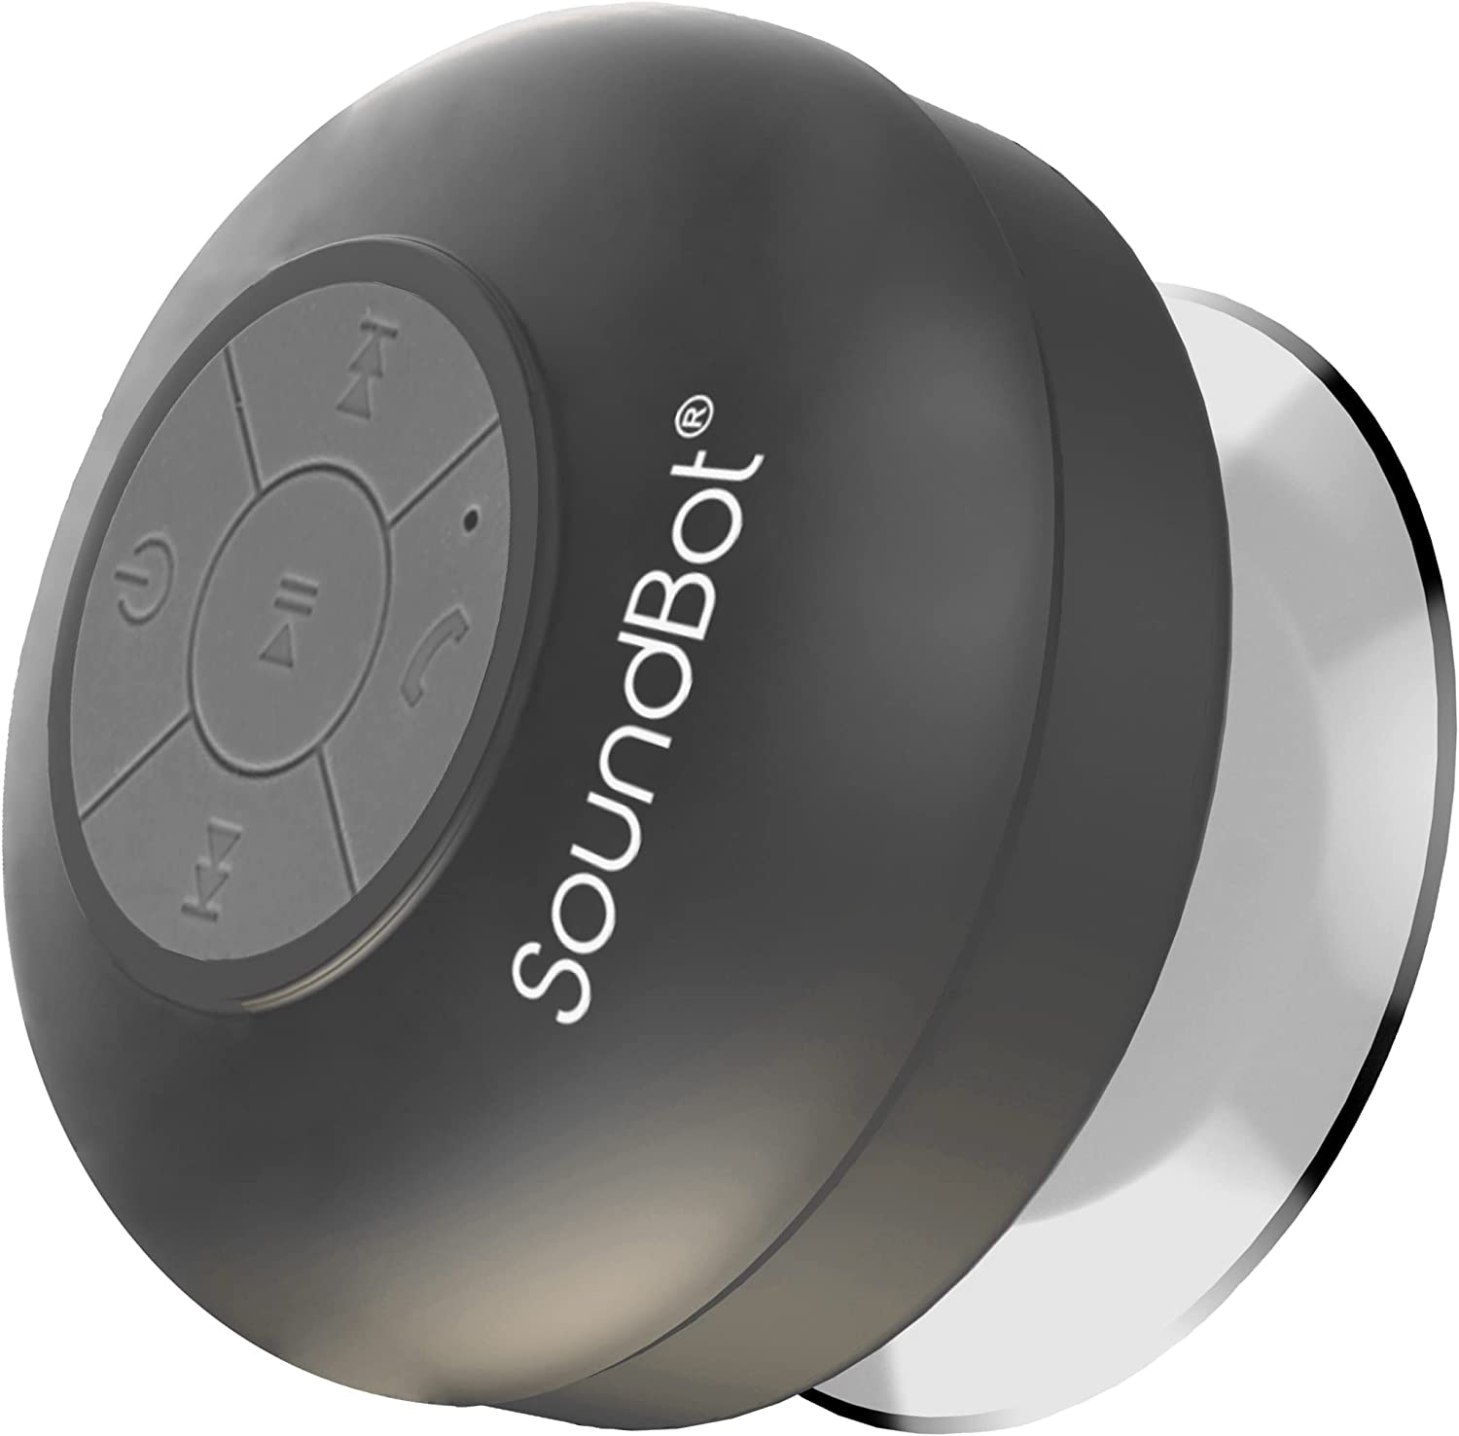 soundbot shower speaker, one of the best gifts for teen boys